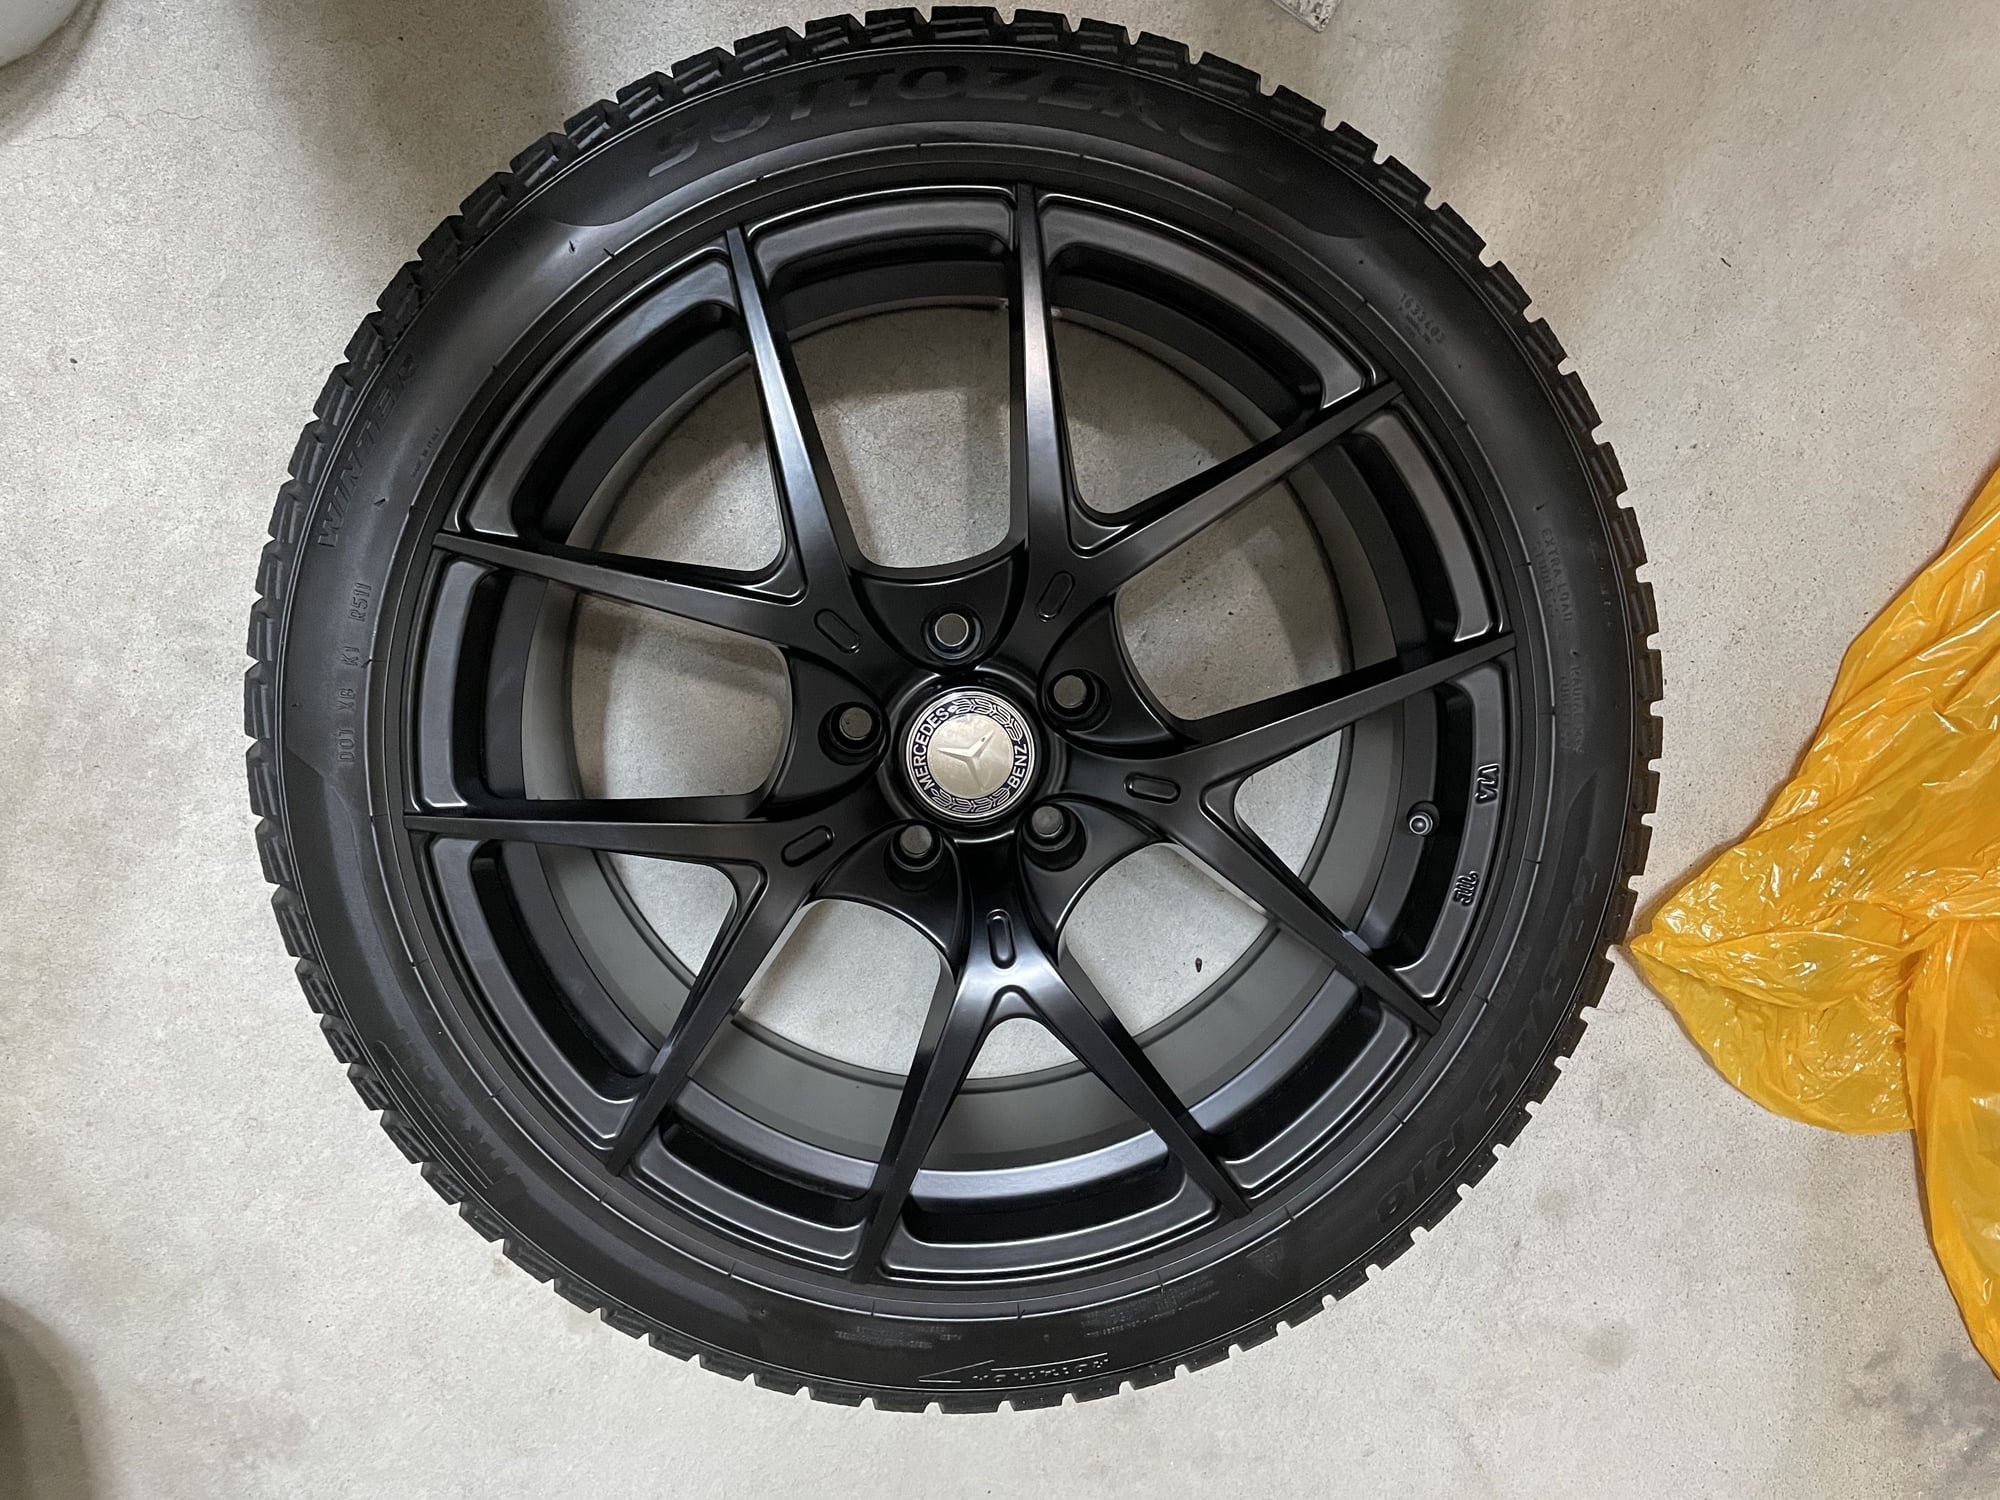 2018 Mercedes-Benz C43 AMG - 225/45/18 Pirelli Sottozero3 winter tires on rims - Wheels and Tires/Axles - $900 - Markham, ON L6B0E1, Canada